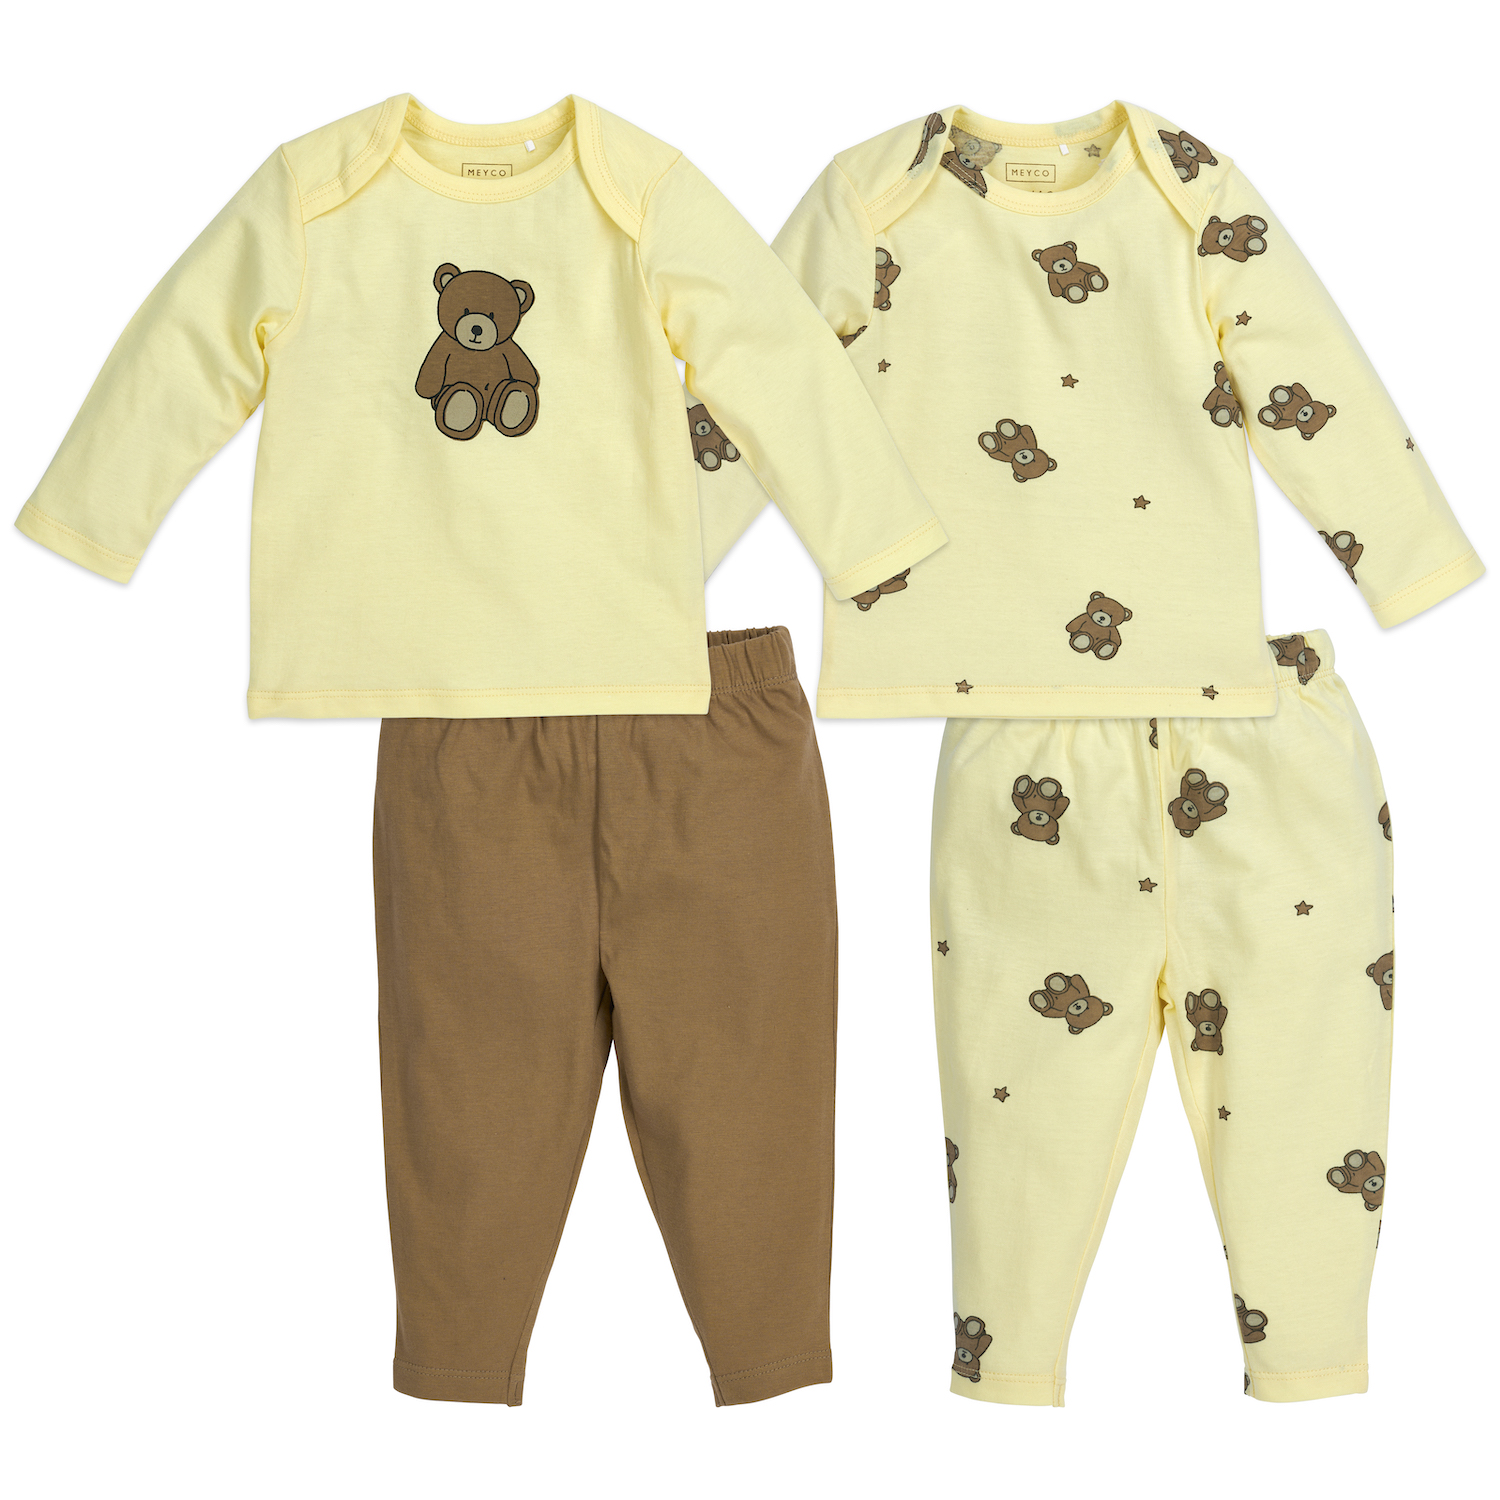 Baby pajamas 2-pack Teddy Bear - Soft Yellow - Size 74/80